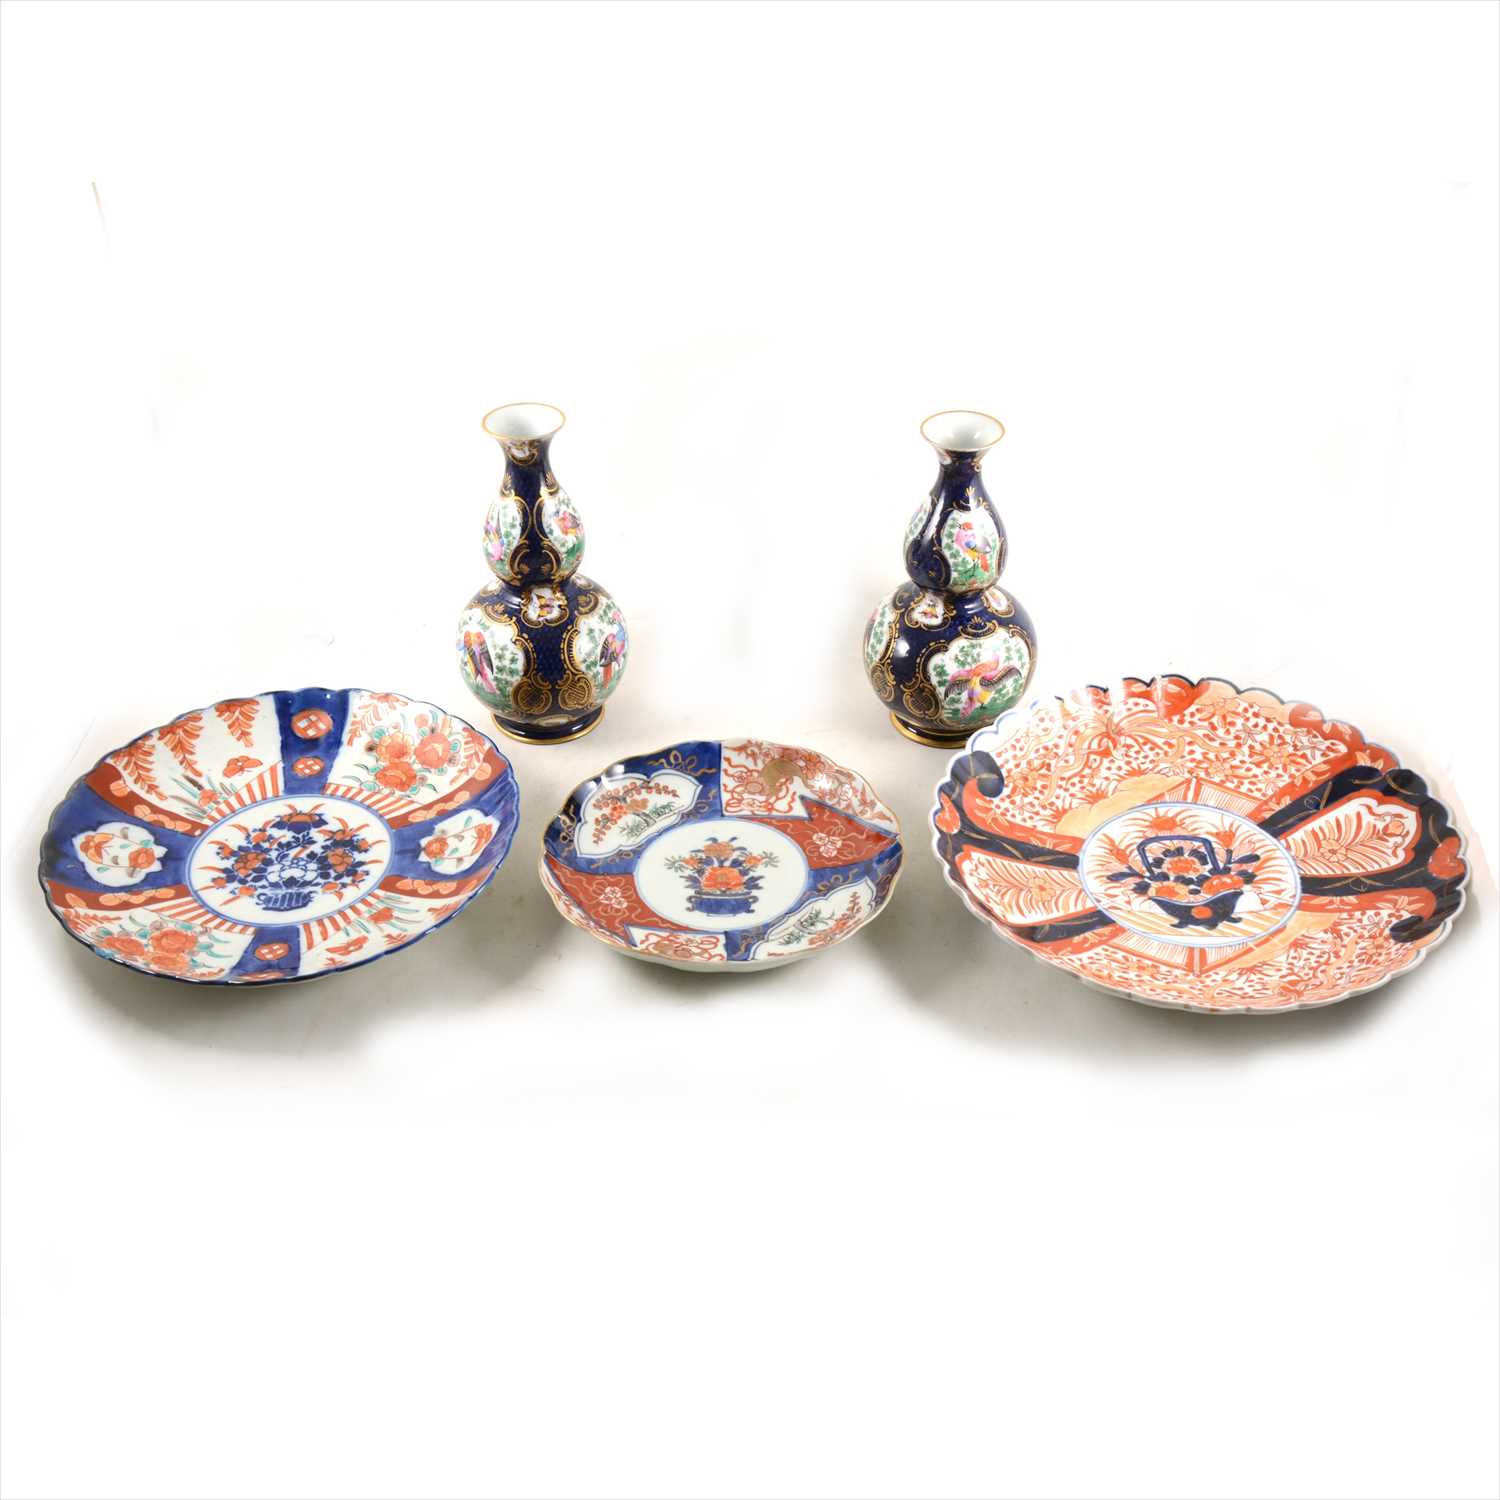 Lot 44 - Three Imari-ware plates, plus a pair of double gourd shape vases.